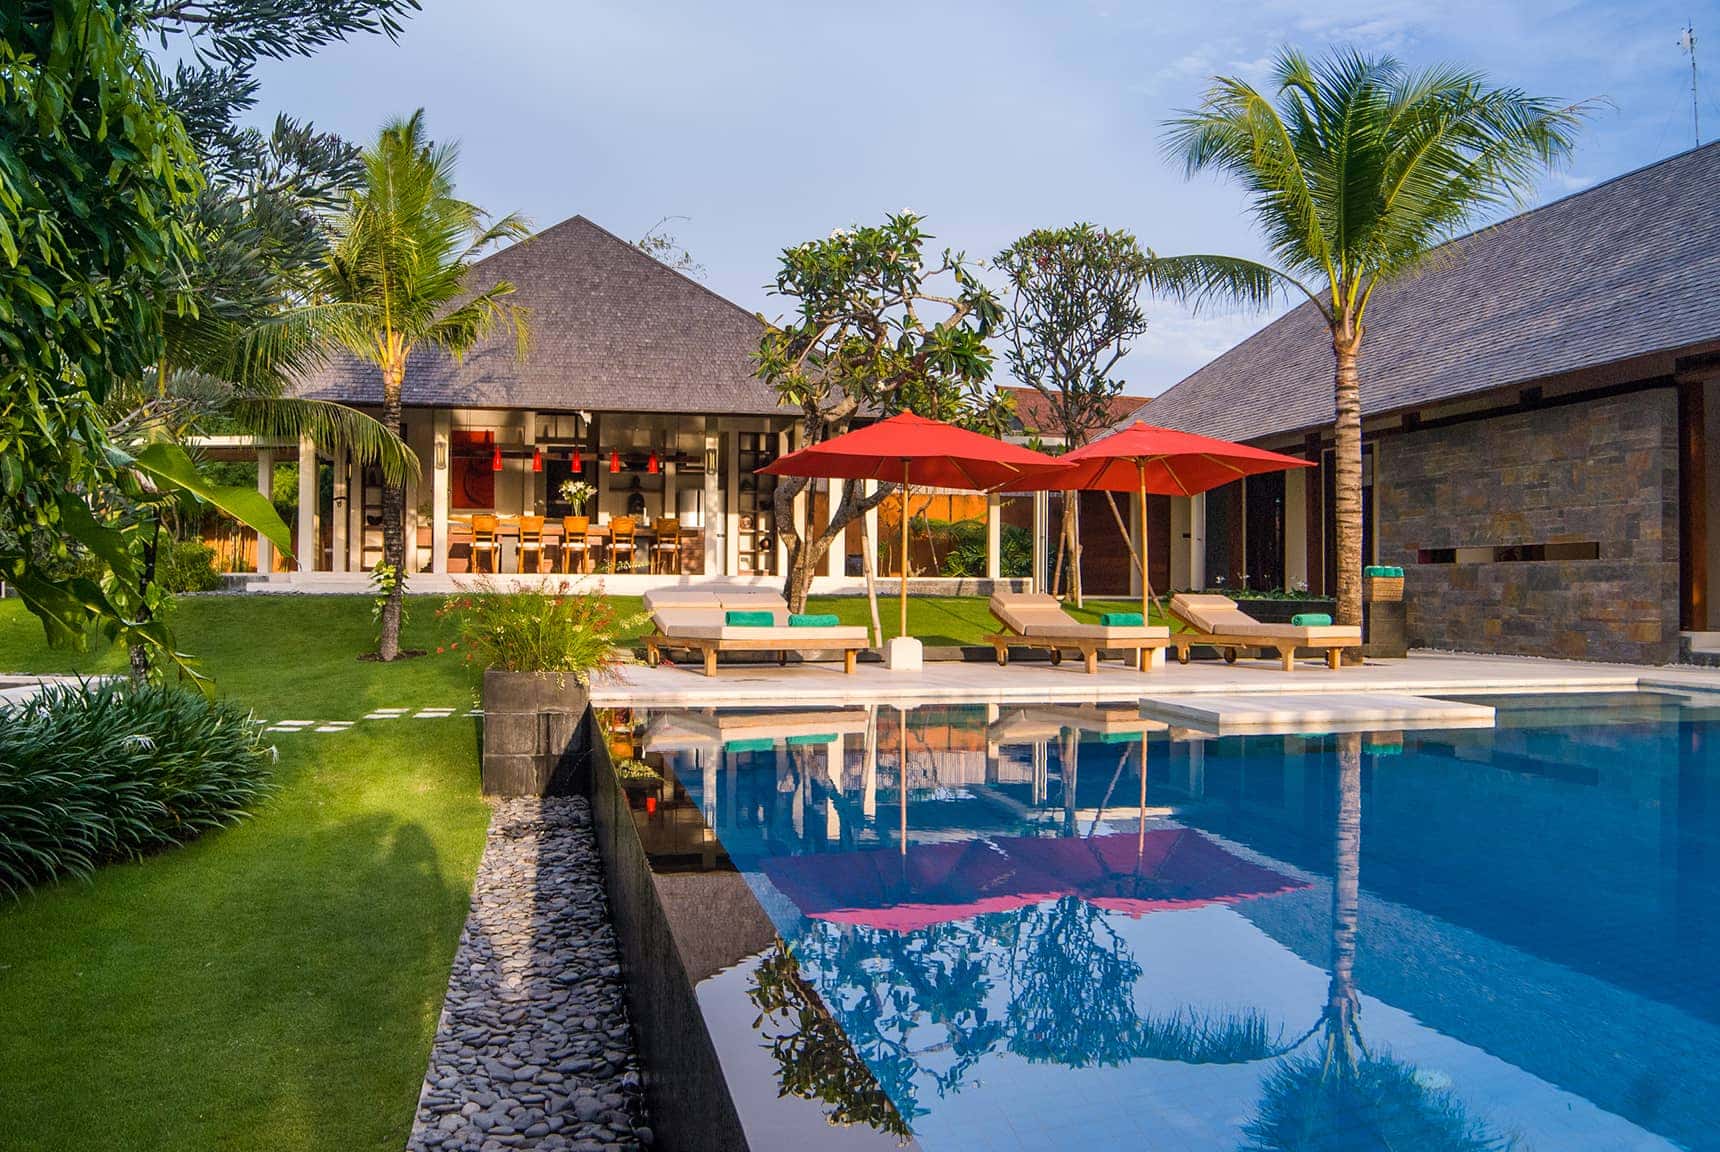 Villa Astika Toyaning - Echo Beach, Bali Indonesia (Bali villa photography by master photographer Rick Carmichael of LuxViz)